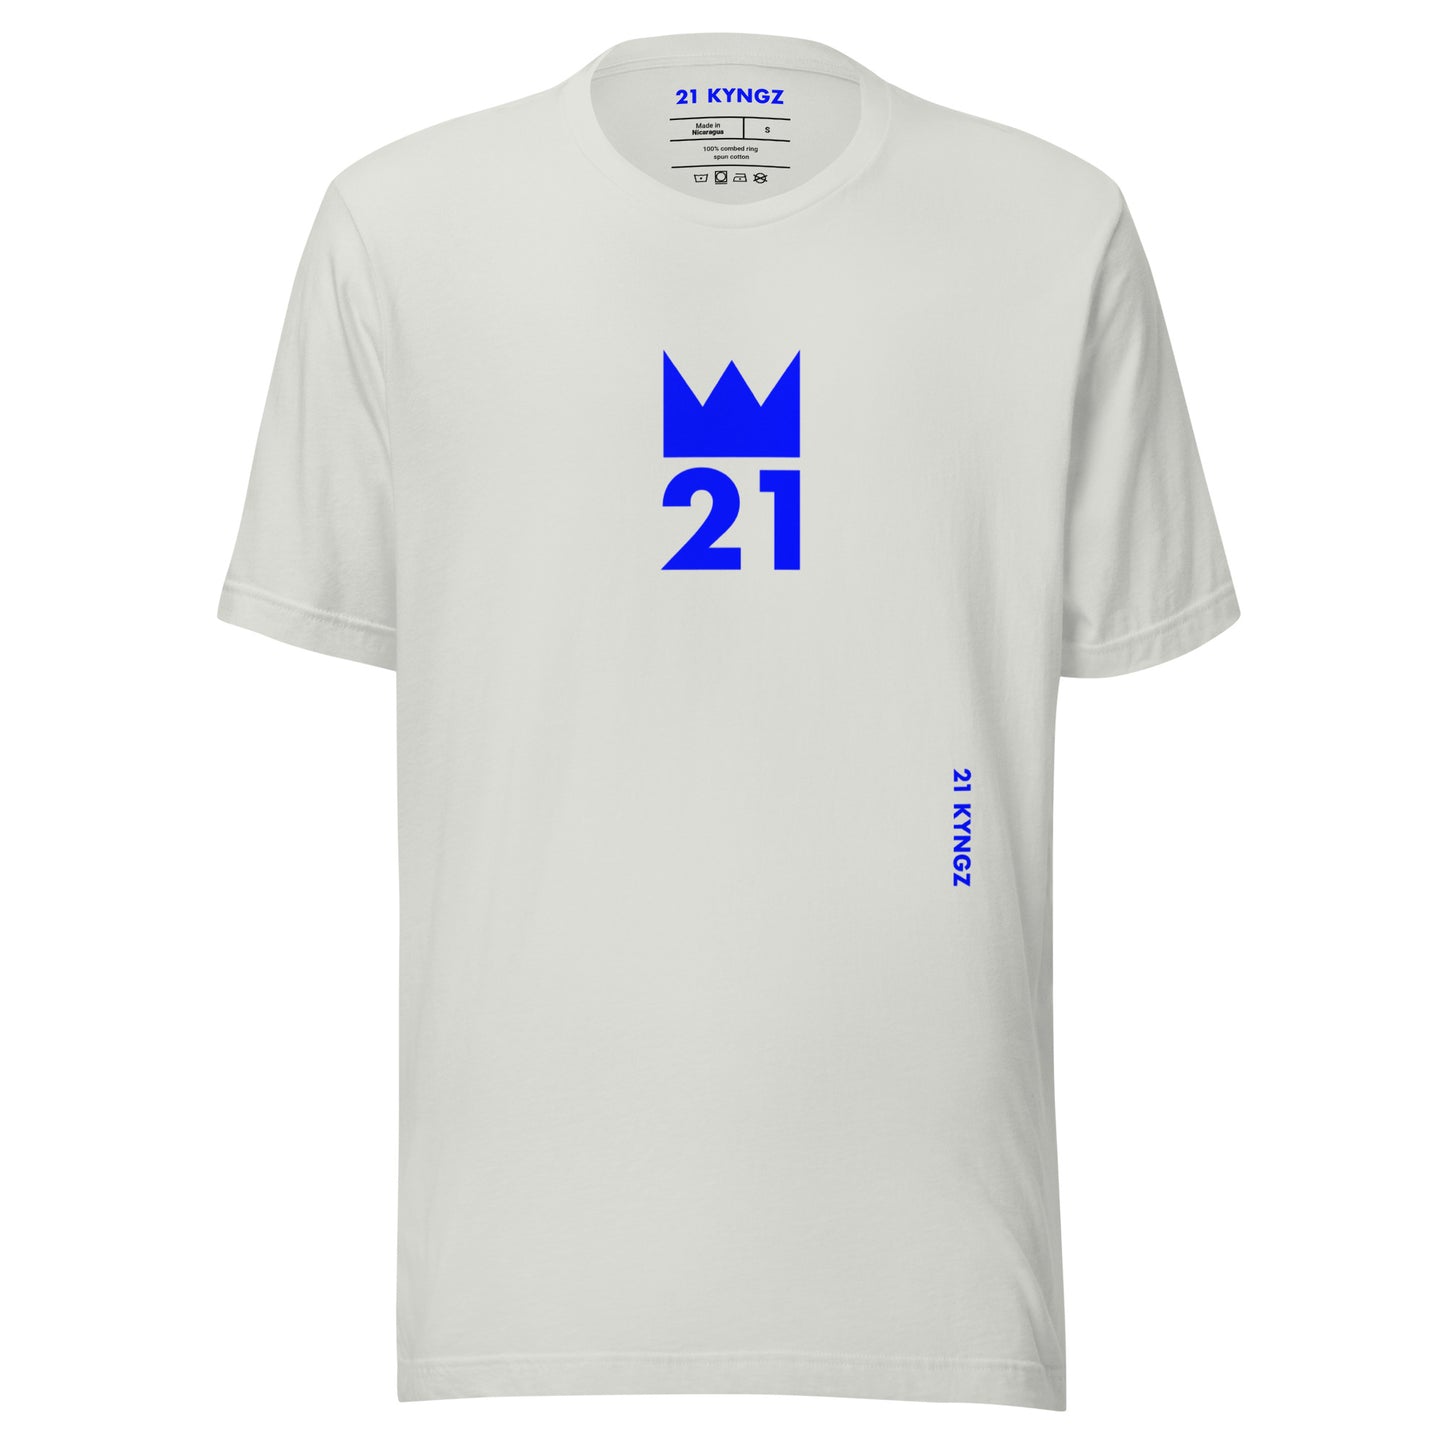 21 KYNGZ (Bl)2 t-shirt